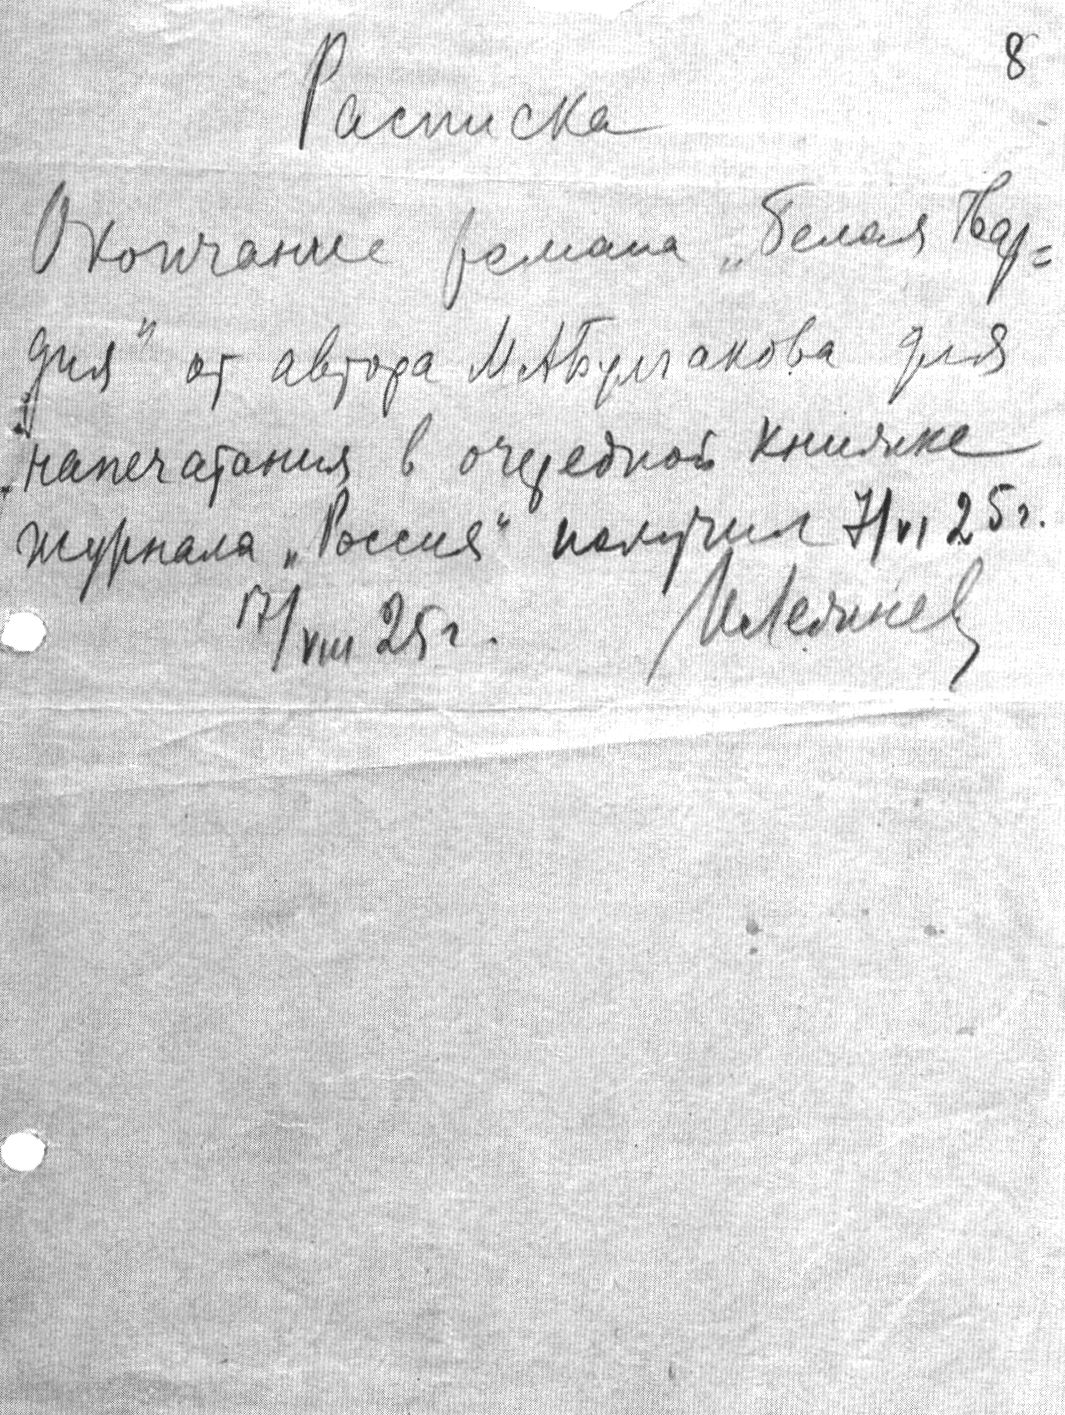 Расписка И.Г. Лежнева в получении от М.А. Булгакова окончания романа «Белая гвардия». 17 августа 1925 г. 